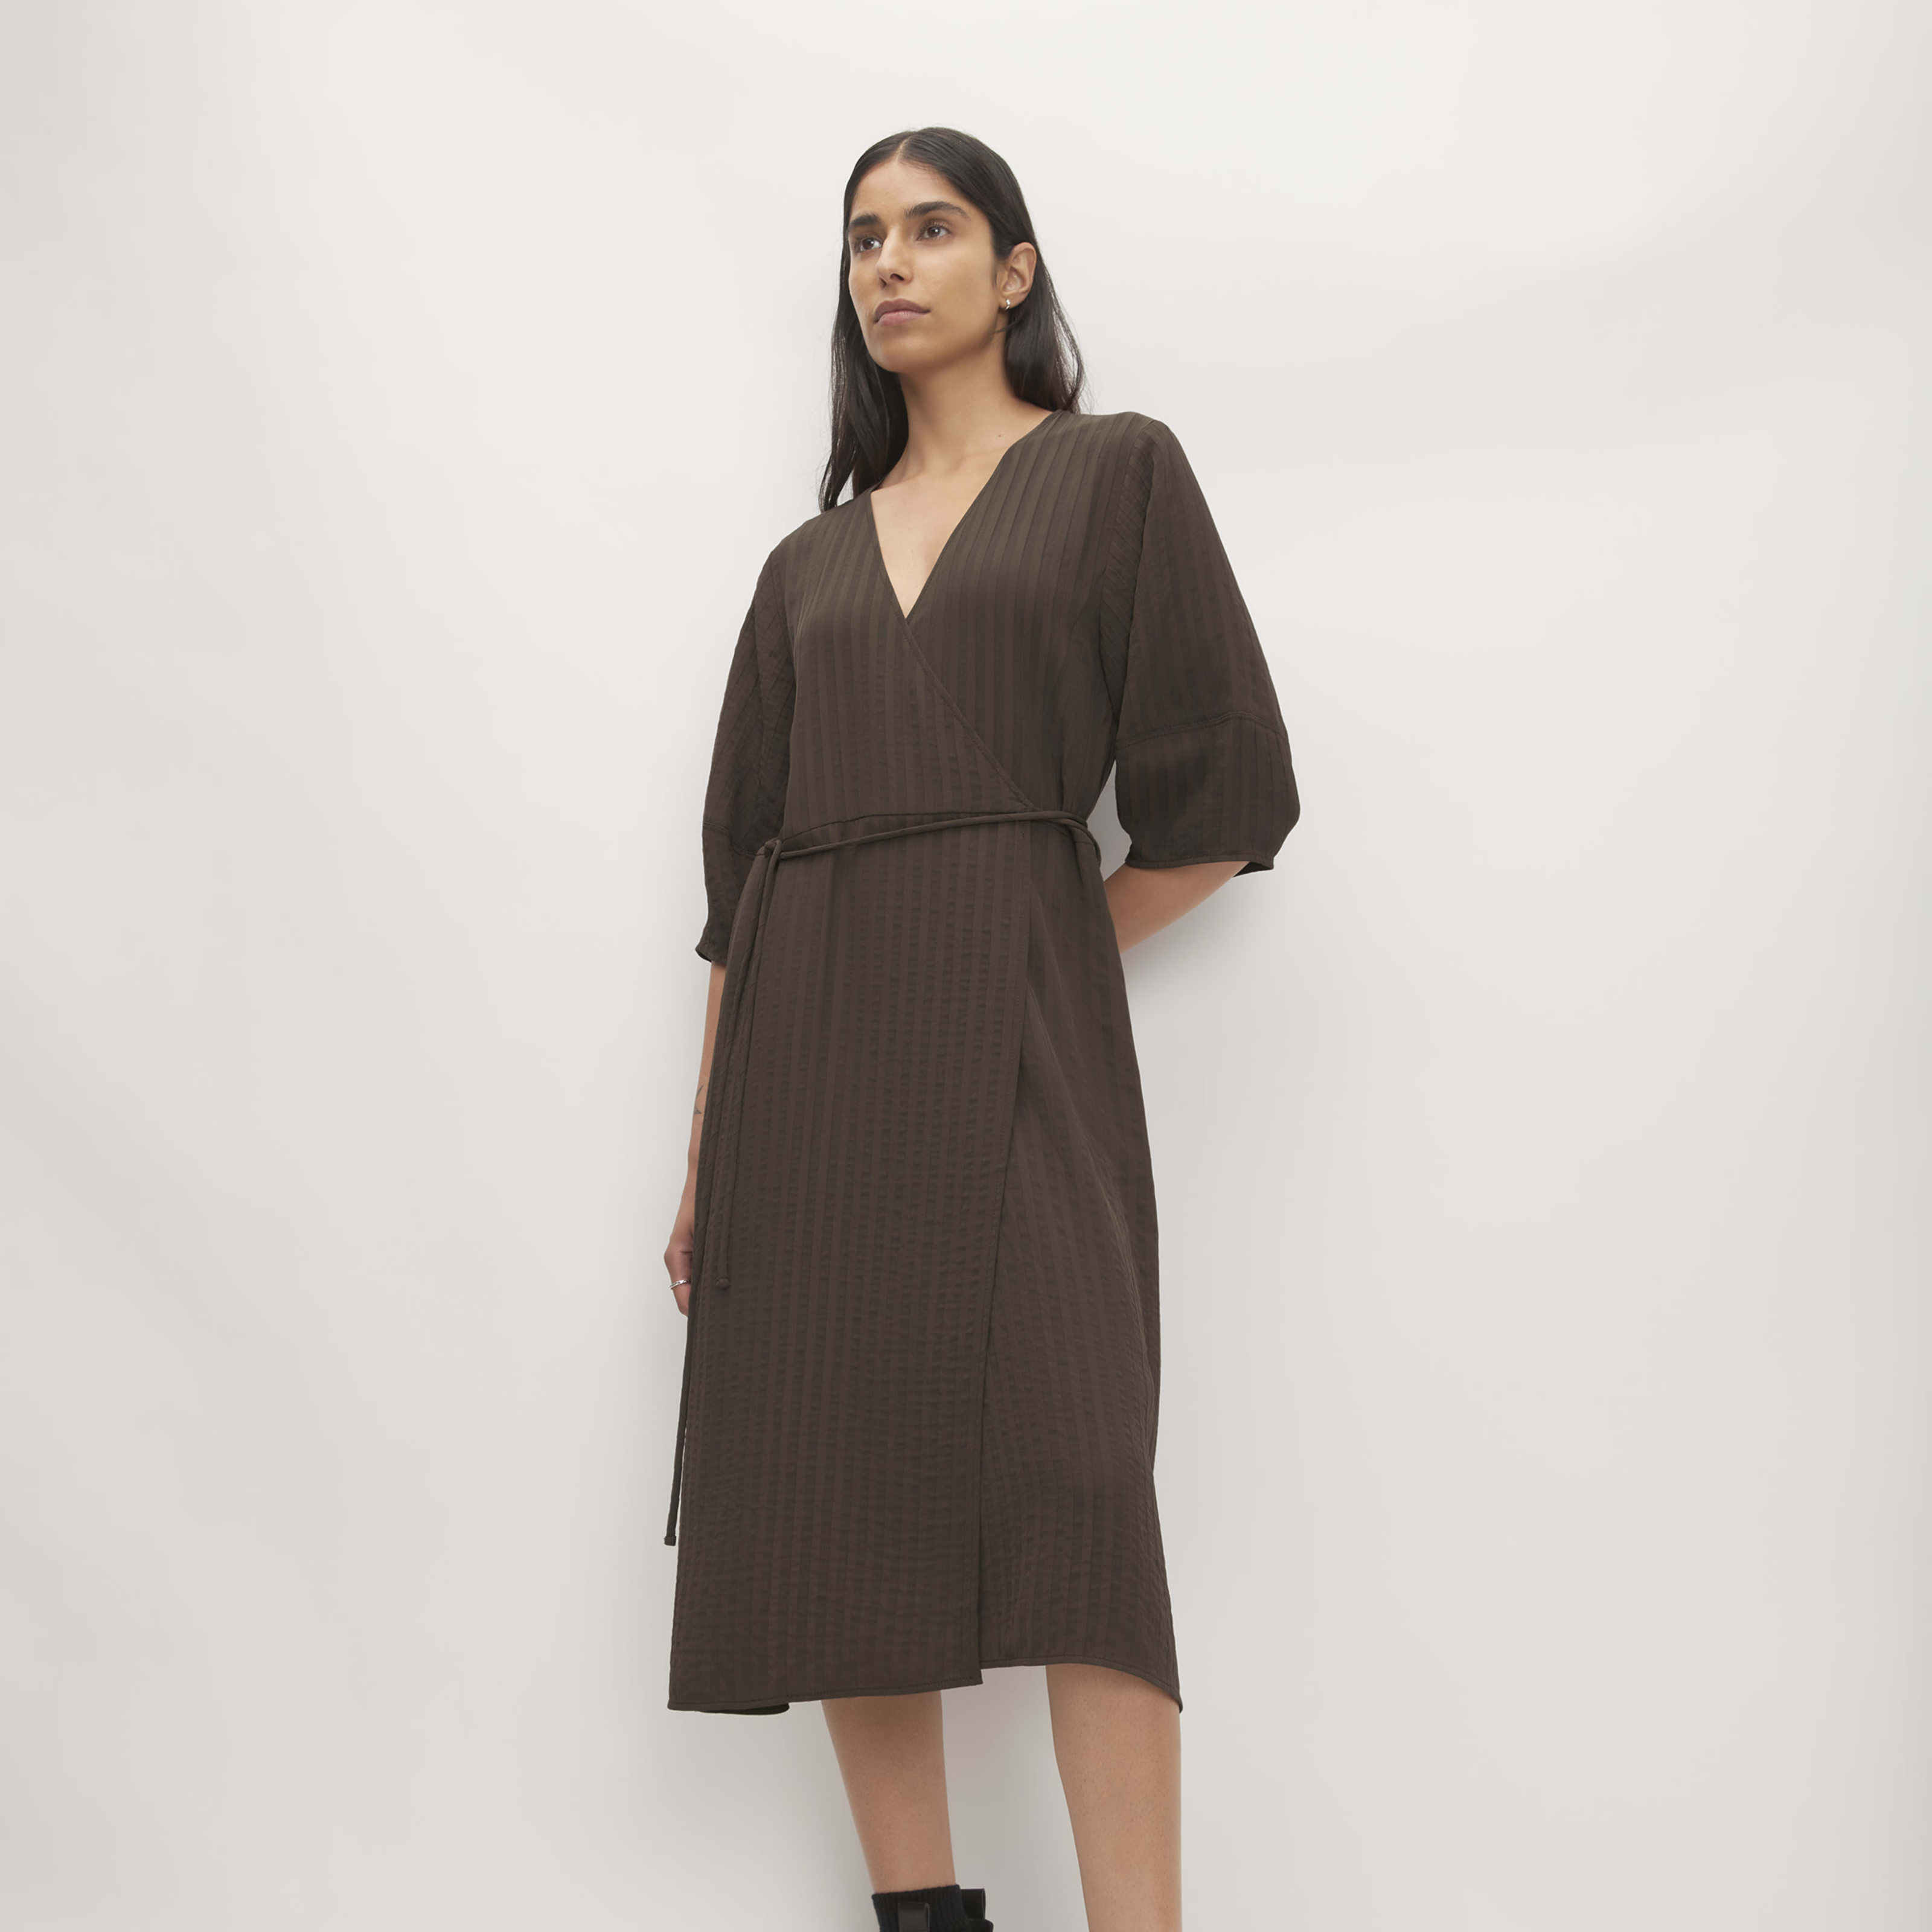 women's city stripe wrap dress by everlane in earth brown, size 00